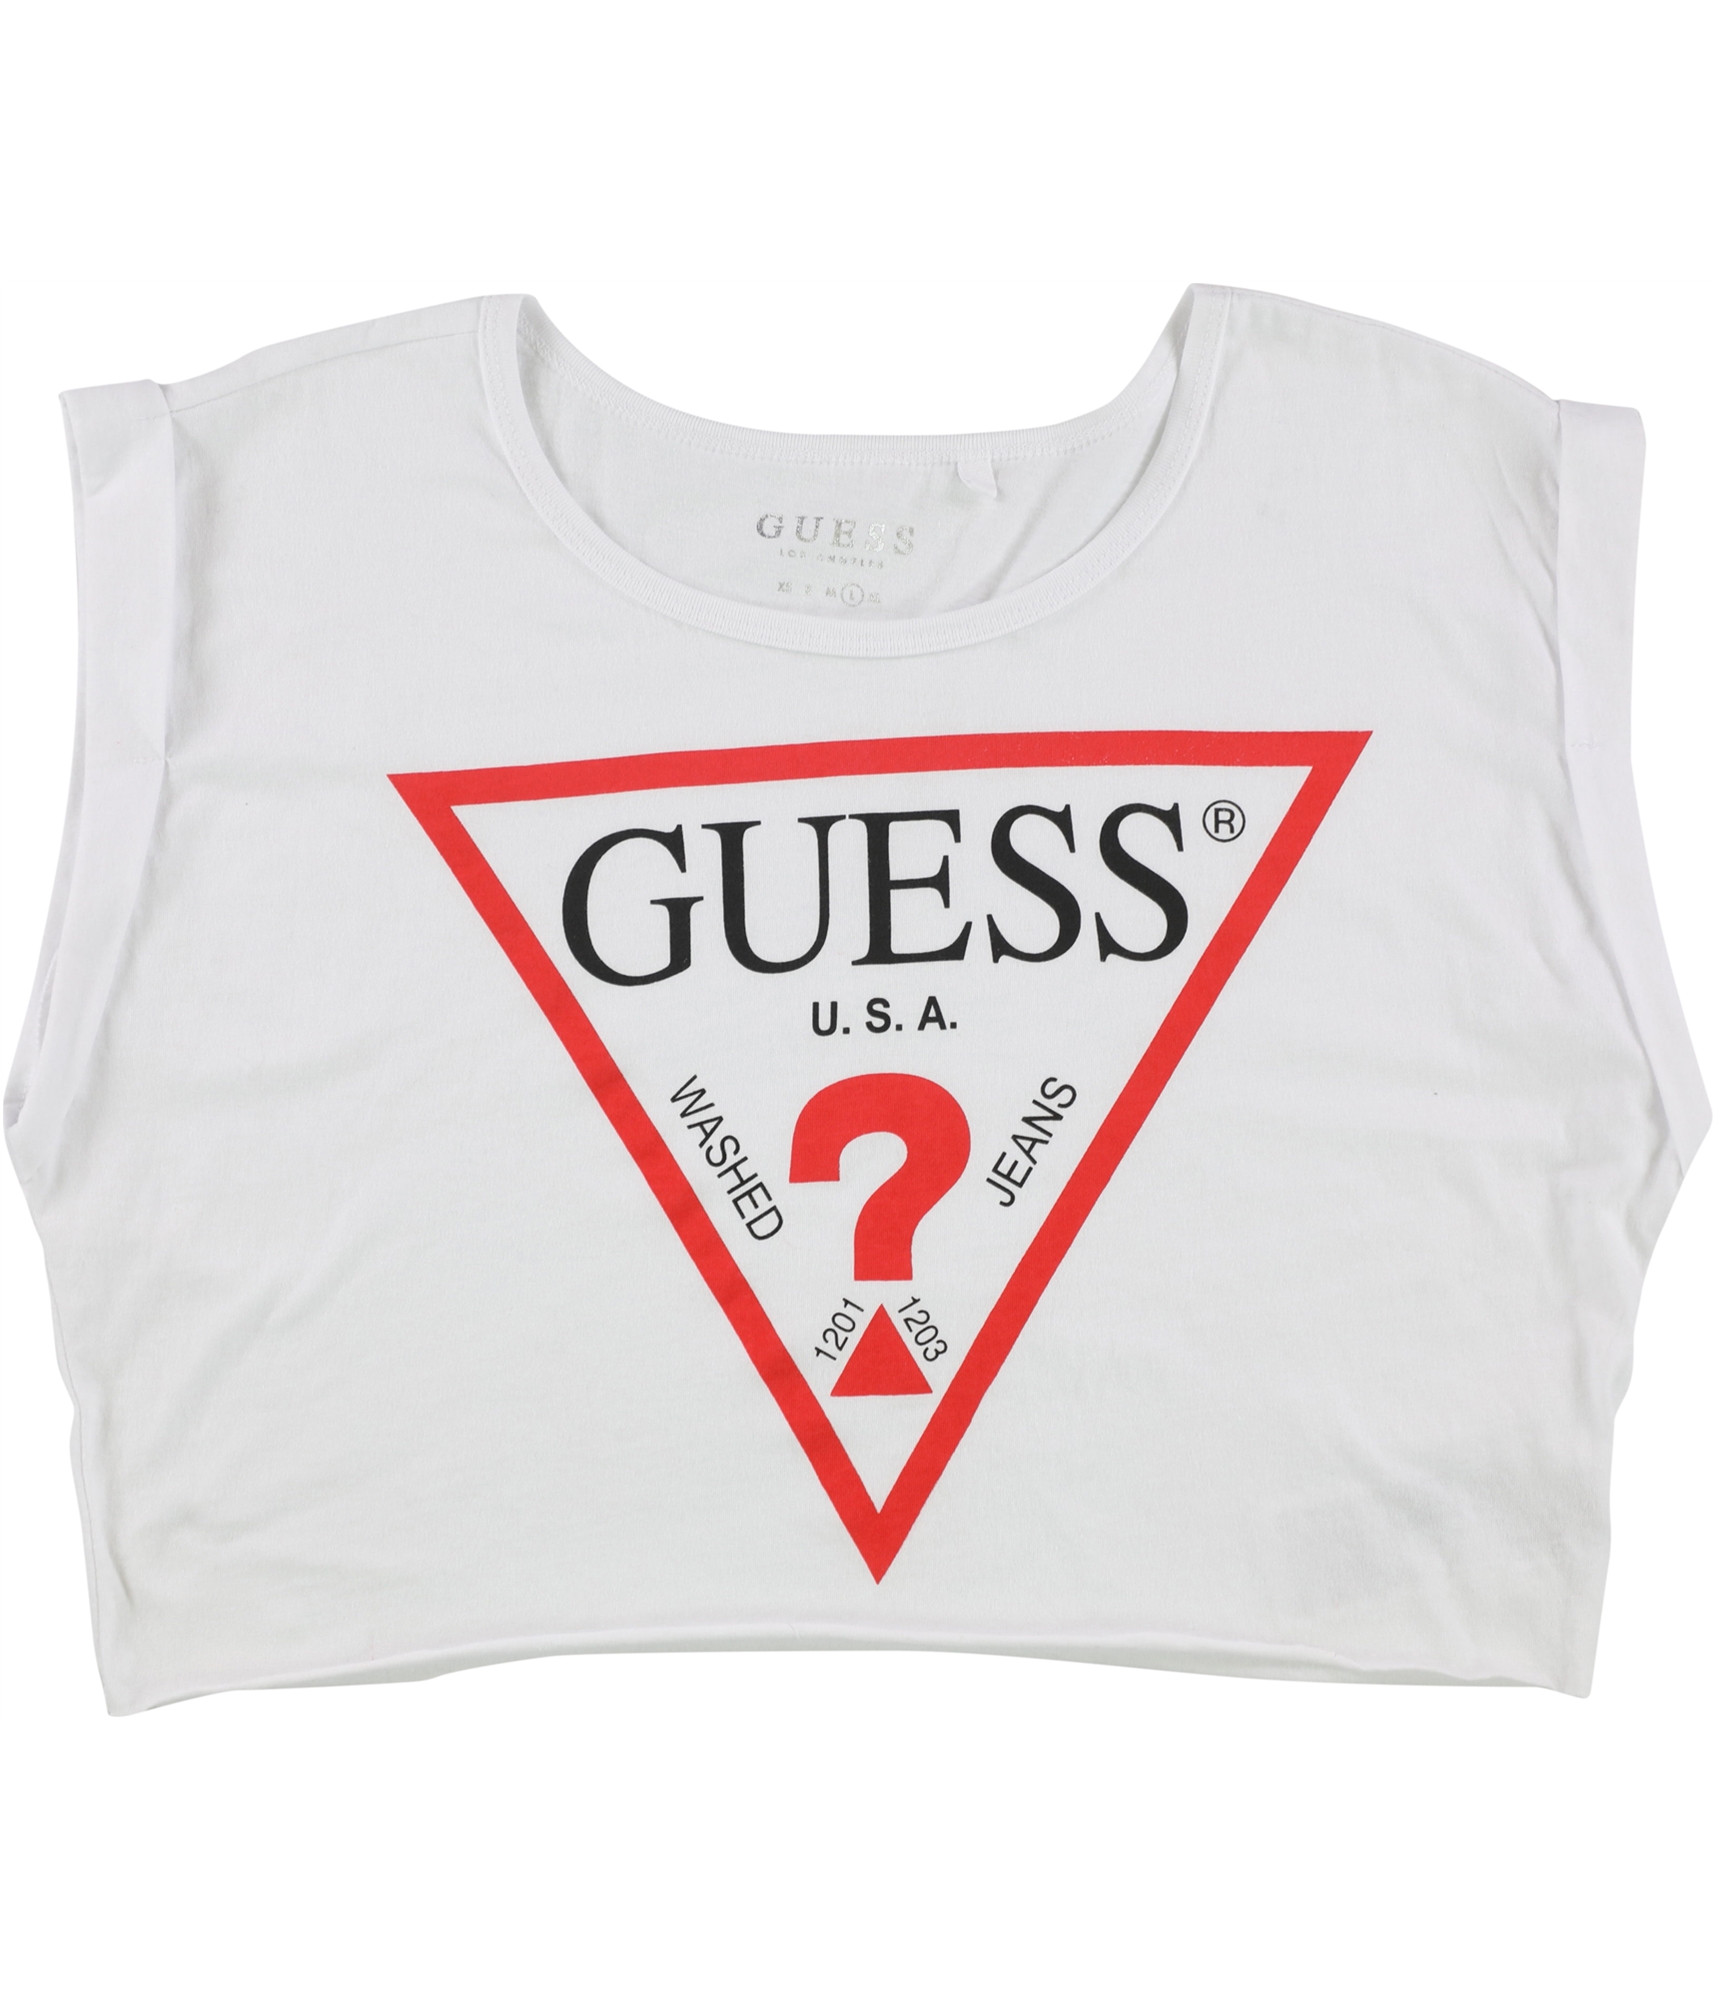 Guess Womens Logo Graphic T Shirt White Large Ebay